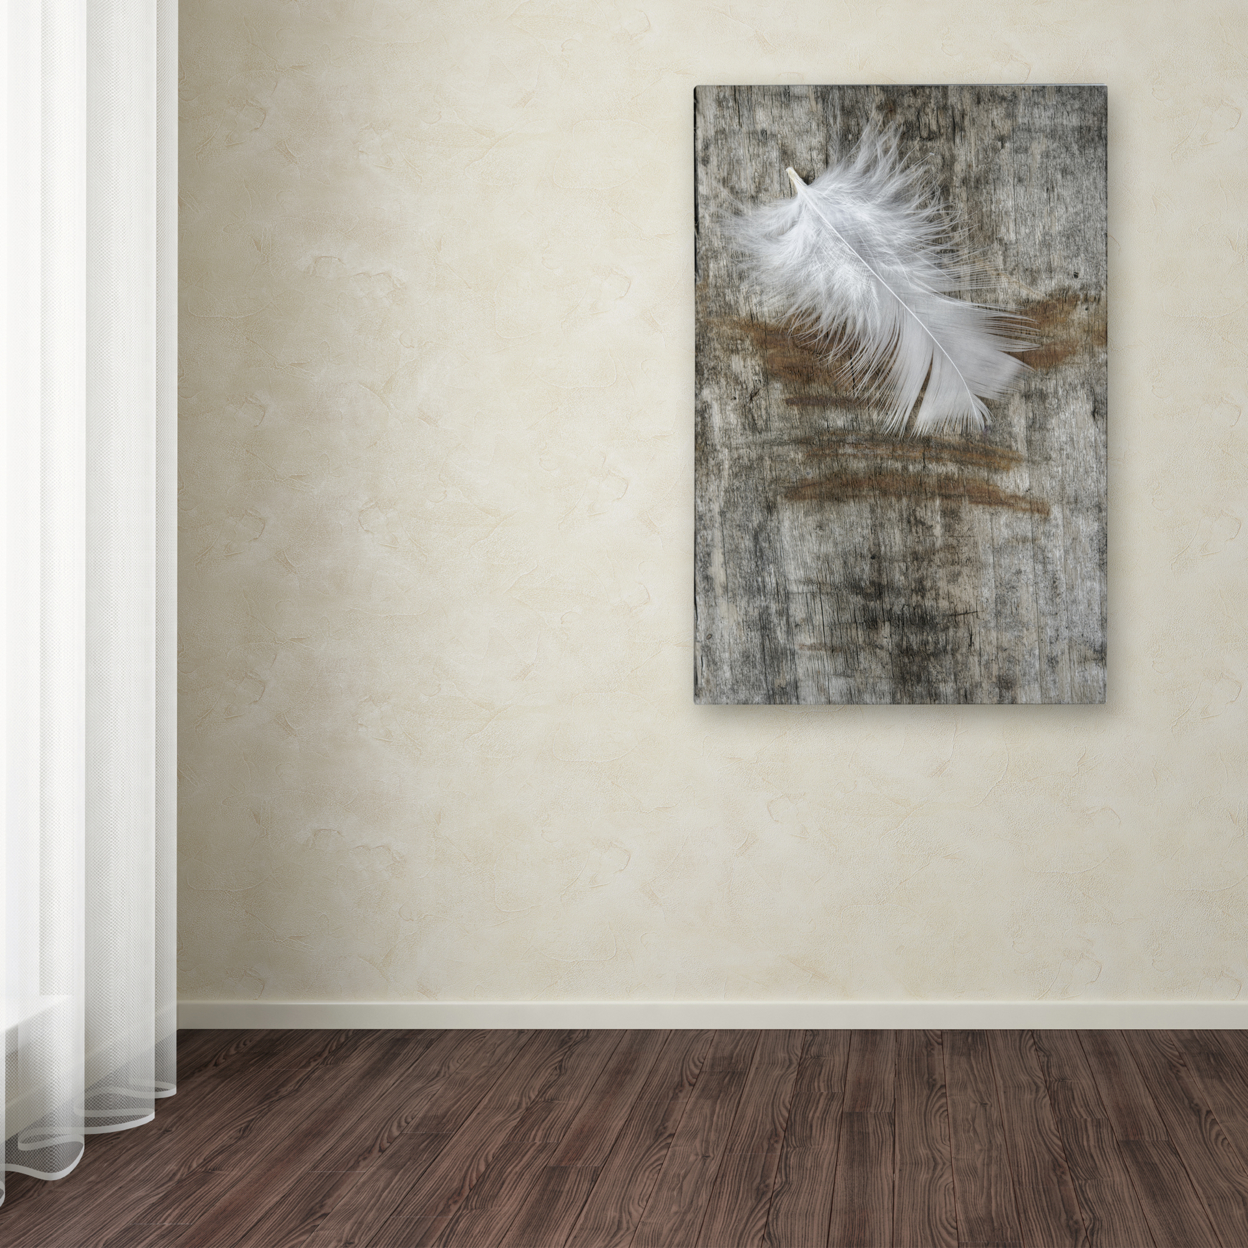 Cora Niele 'White Feather On Wood' Canvas Art 16 X 24